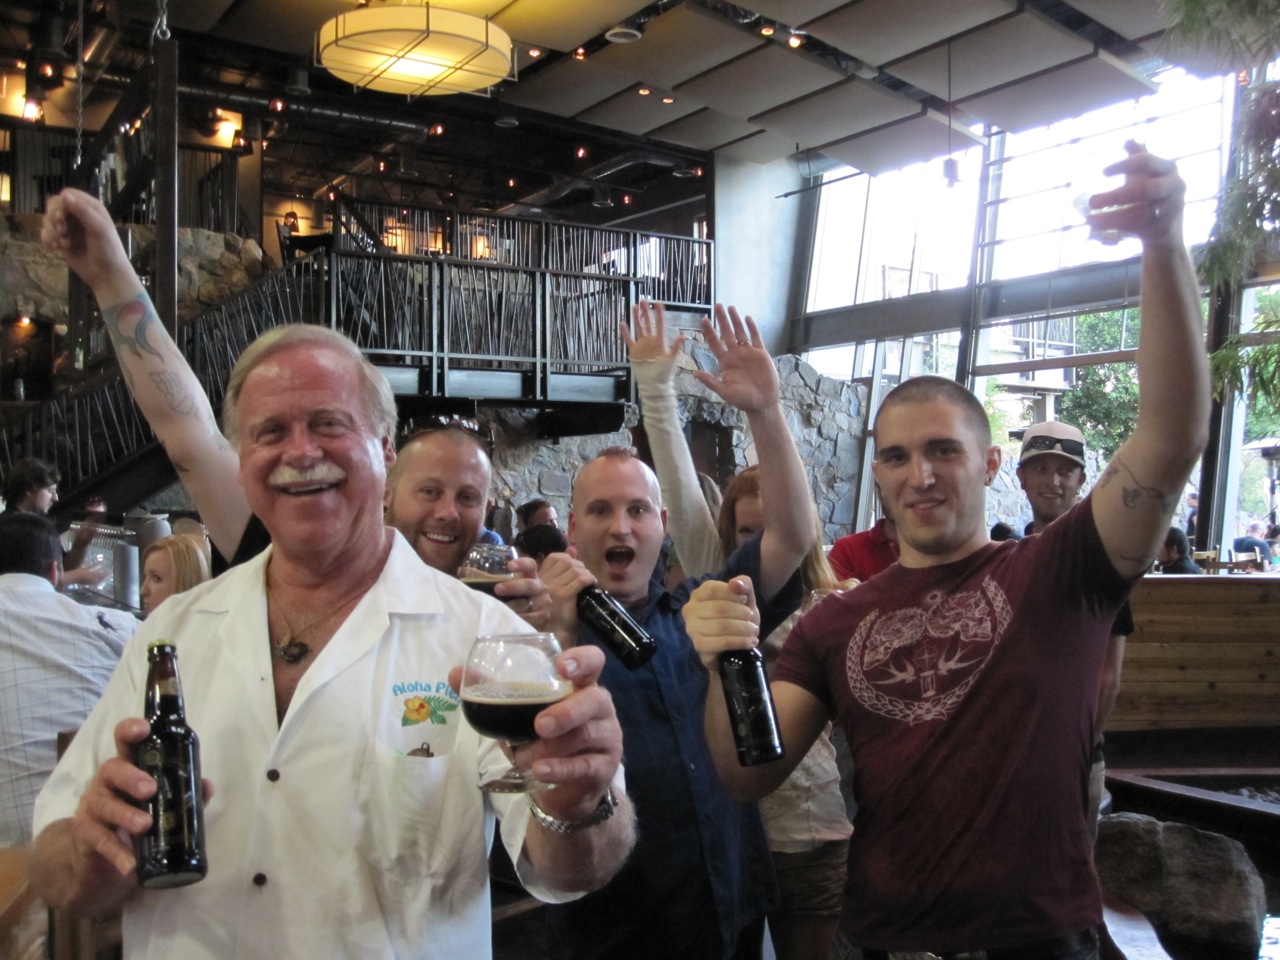 Ken Schmidt celebrating with fellow craft beer revelers in the Bistro on Monday night for our Ken Schmidt GABF Send-off Party